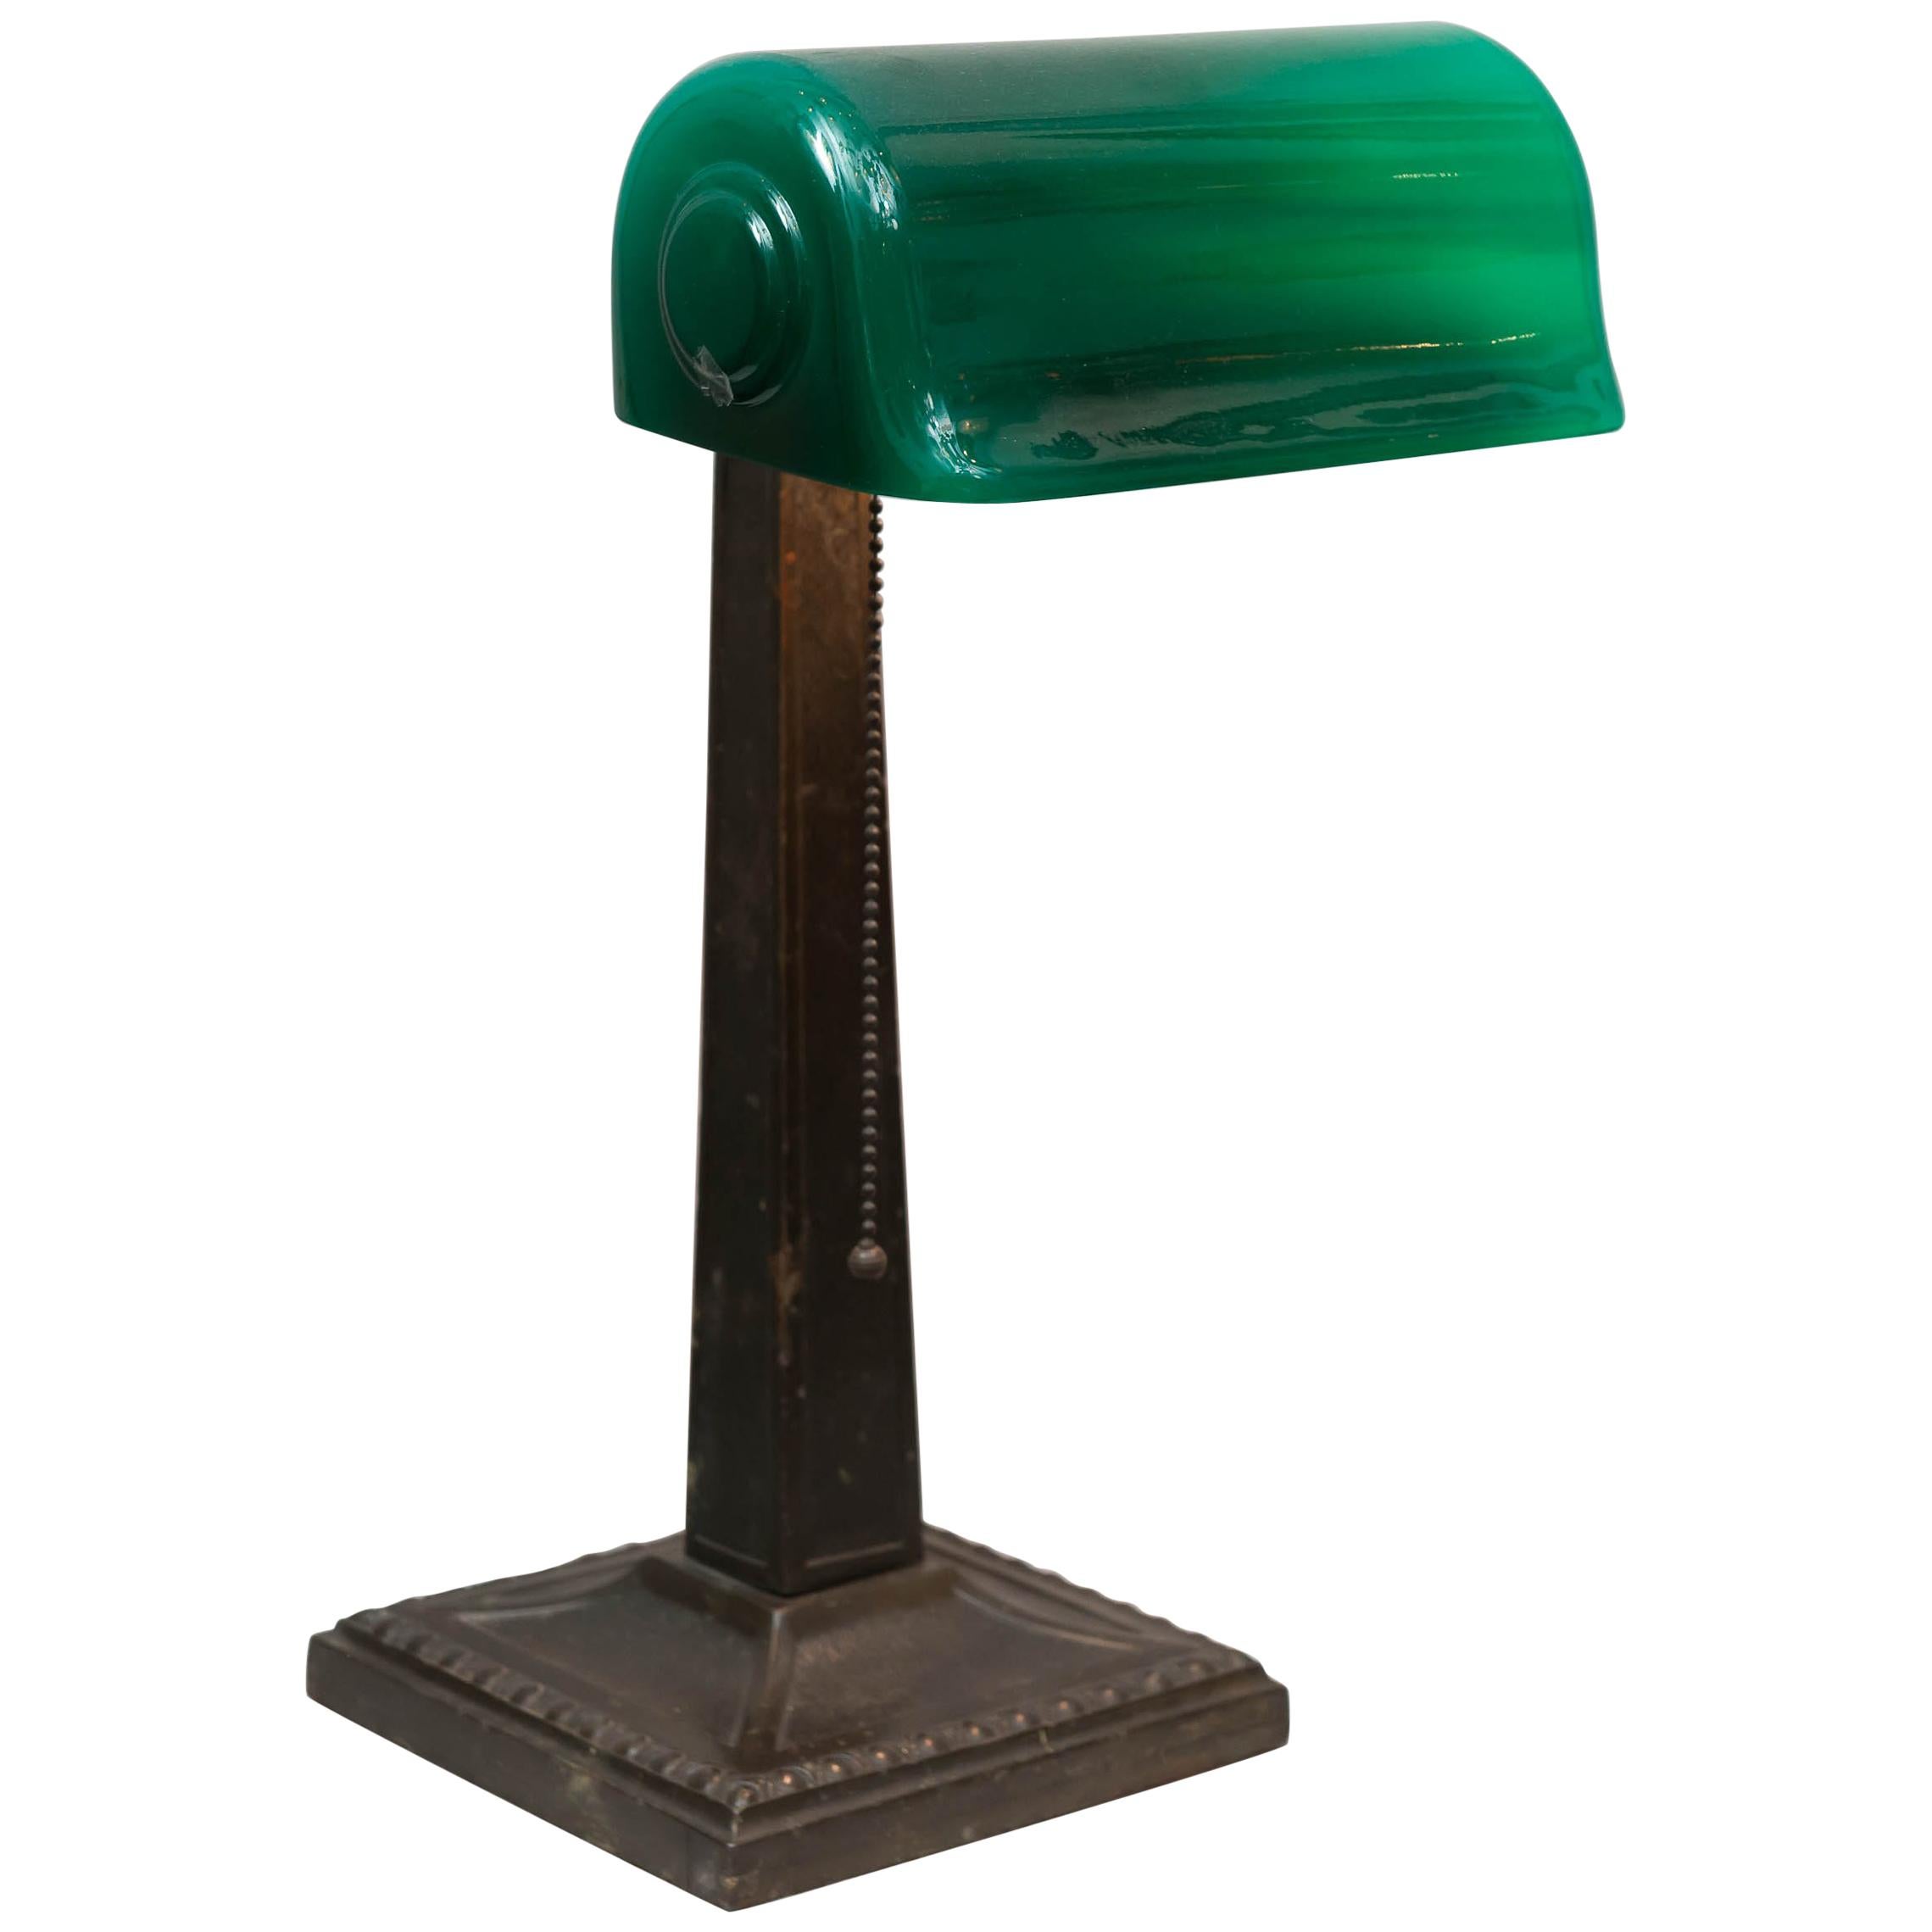 Green Shaded Banker's Lamp, Signed Verdelite, circa 1917